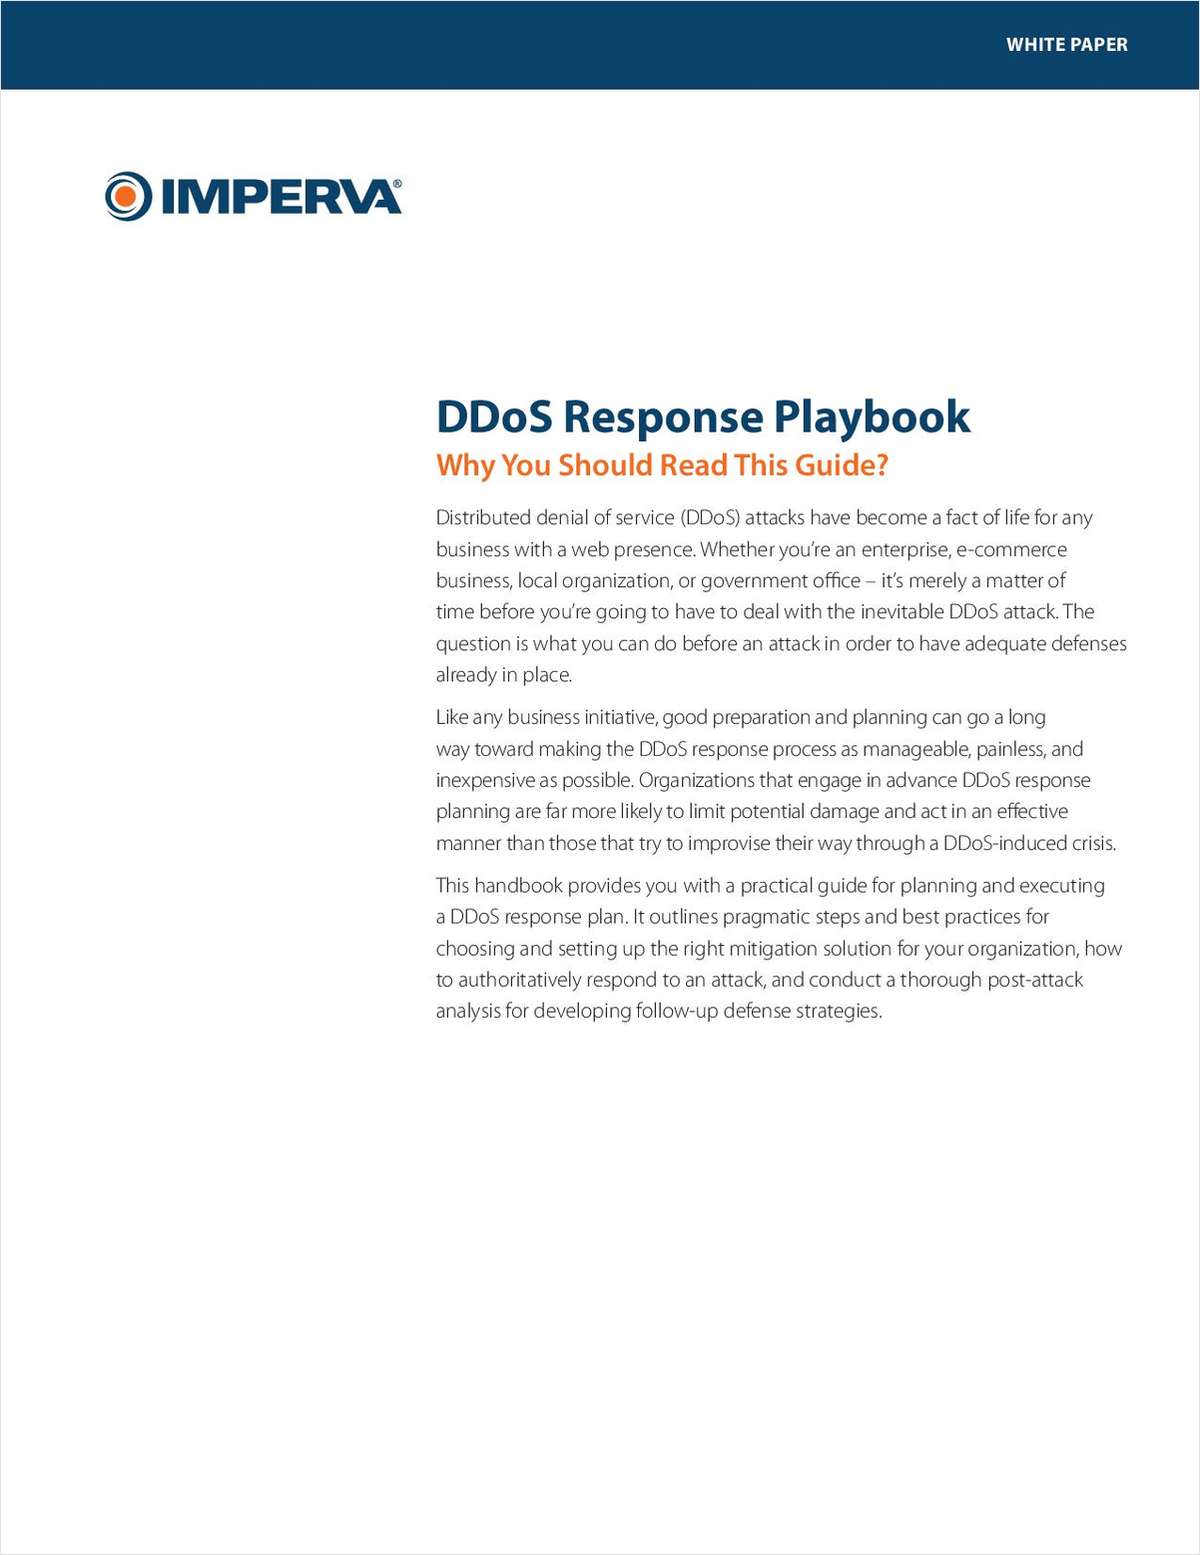 DDoS Response Playbook